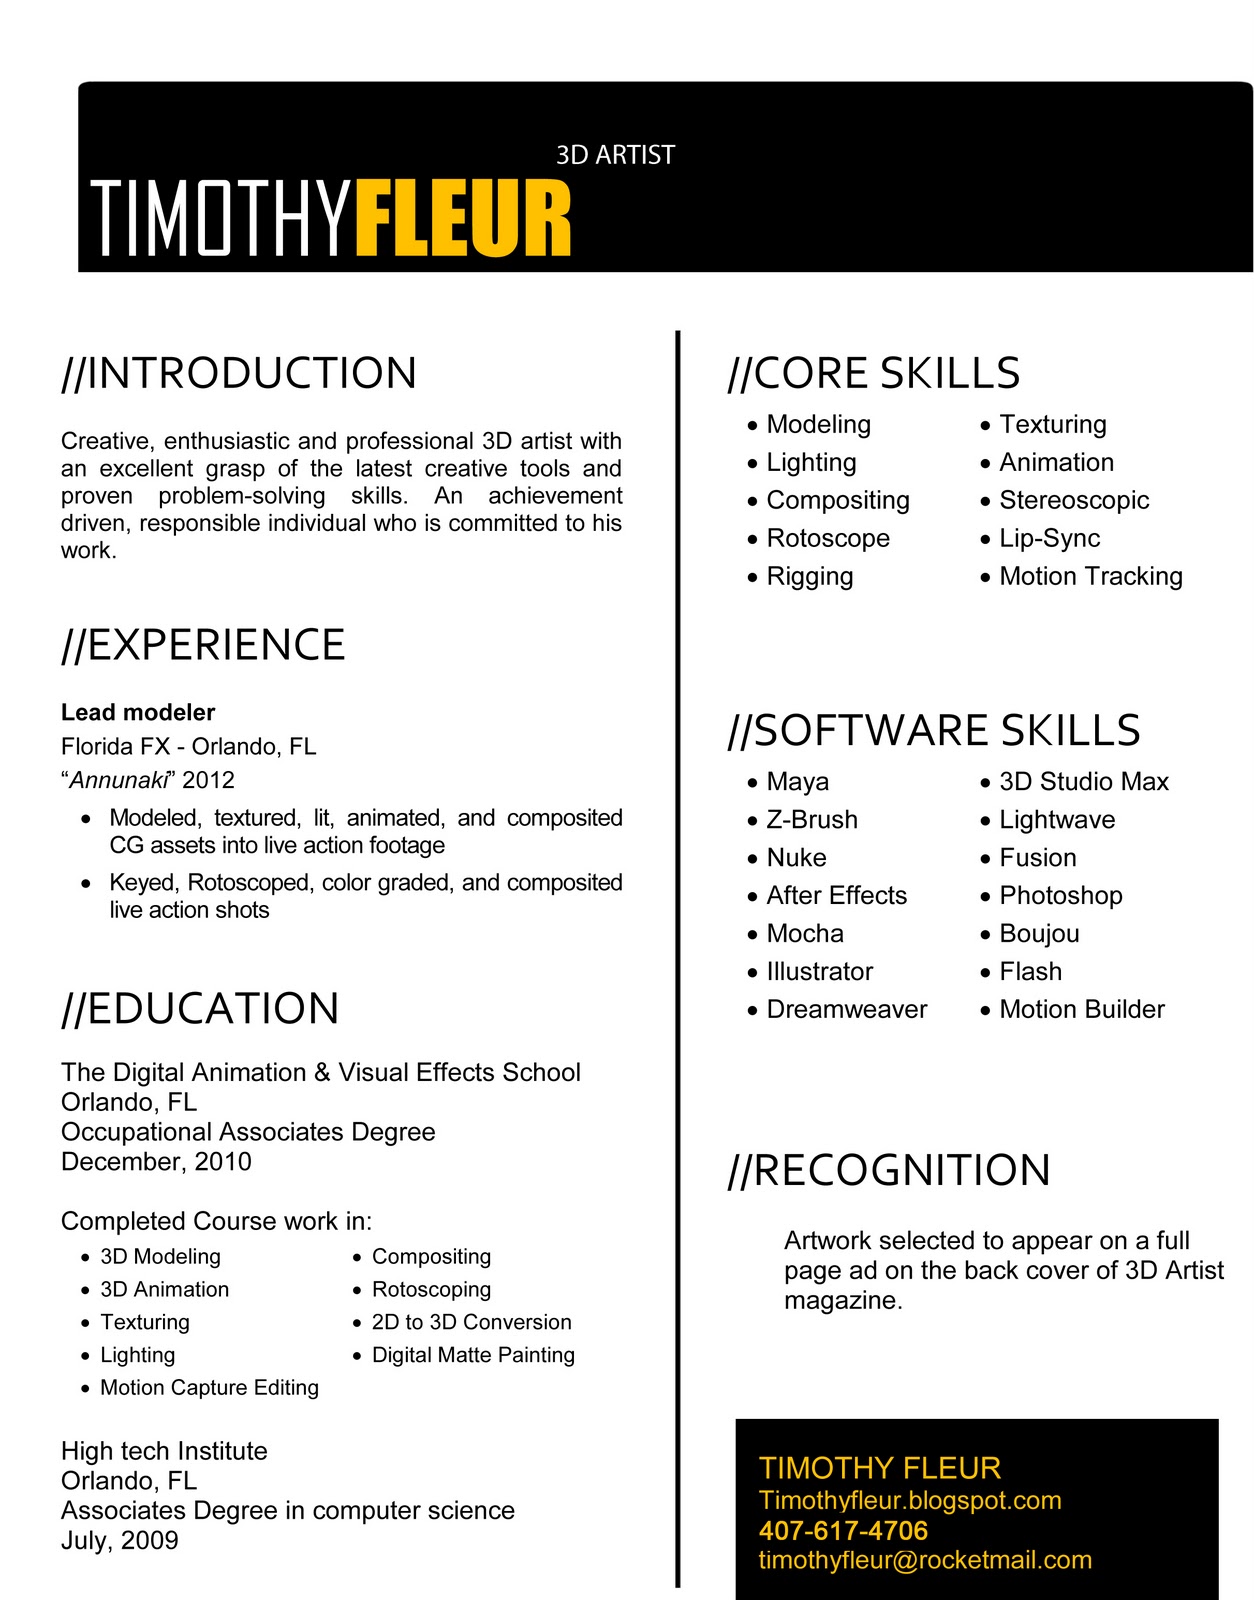 timothy fleur 3d artist   resume